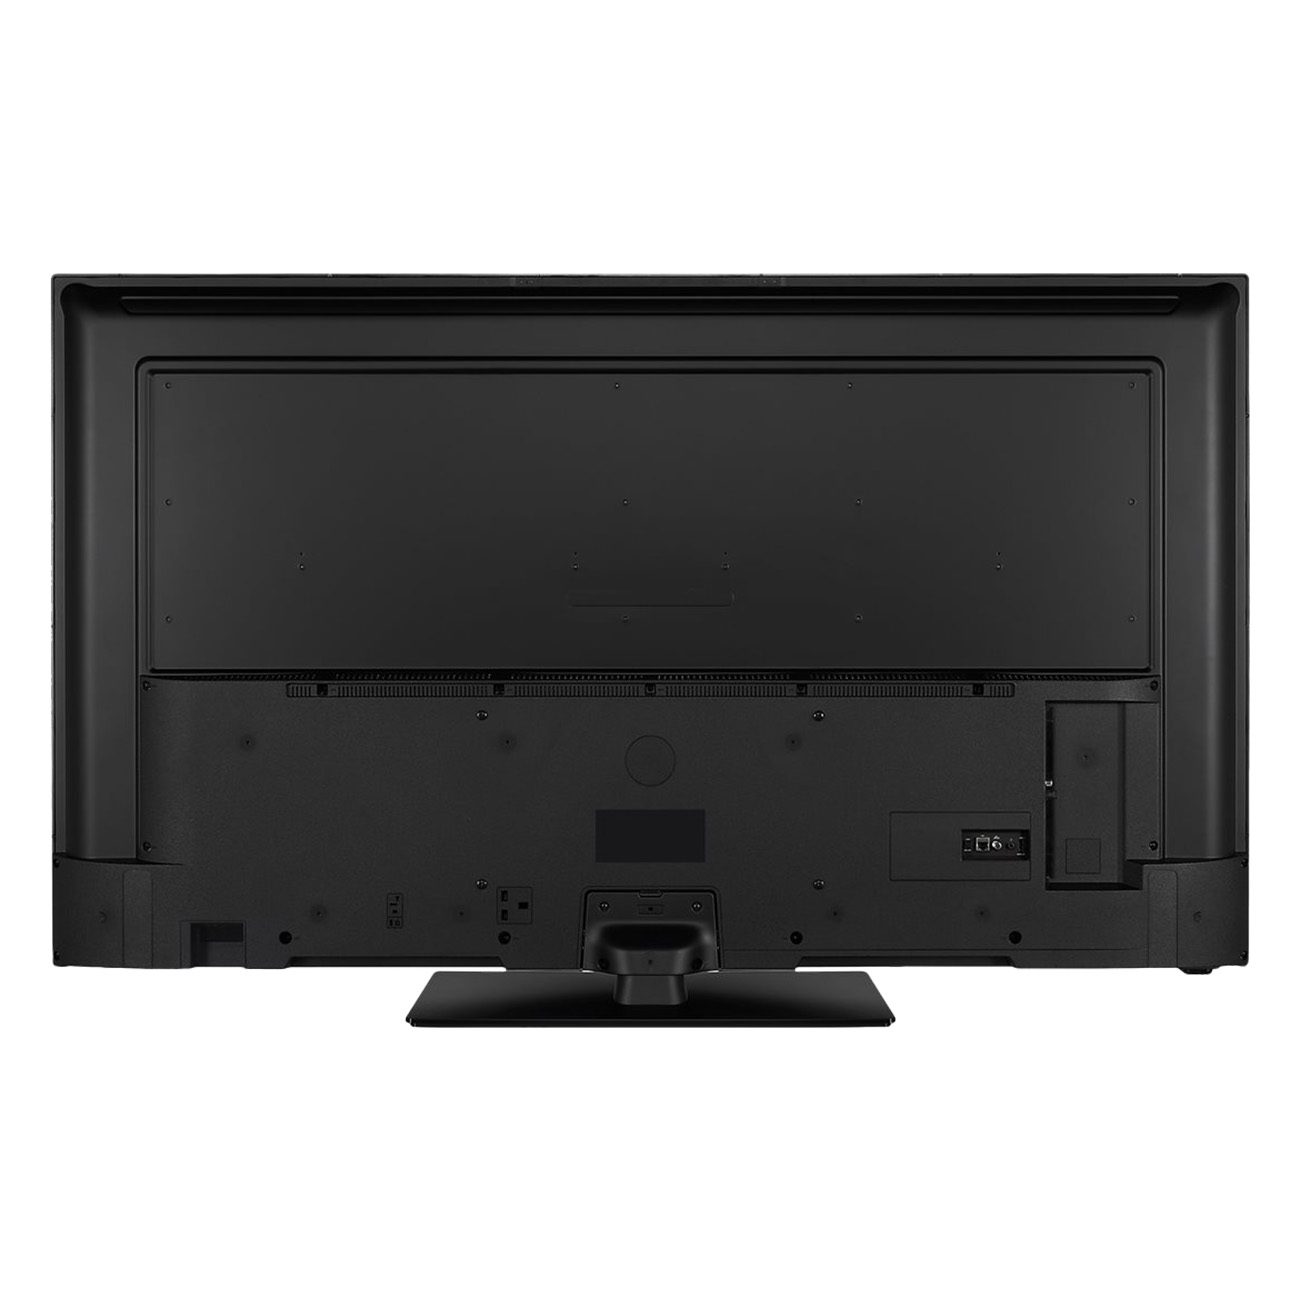 cm, SMART TX-65JXW604 TV 65 PANASONIC 164 (Flat, my TV, (Smart)) / Screen 4K Home 4K, Zoll UHD